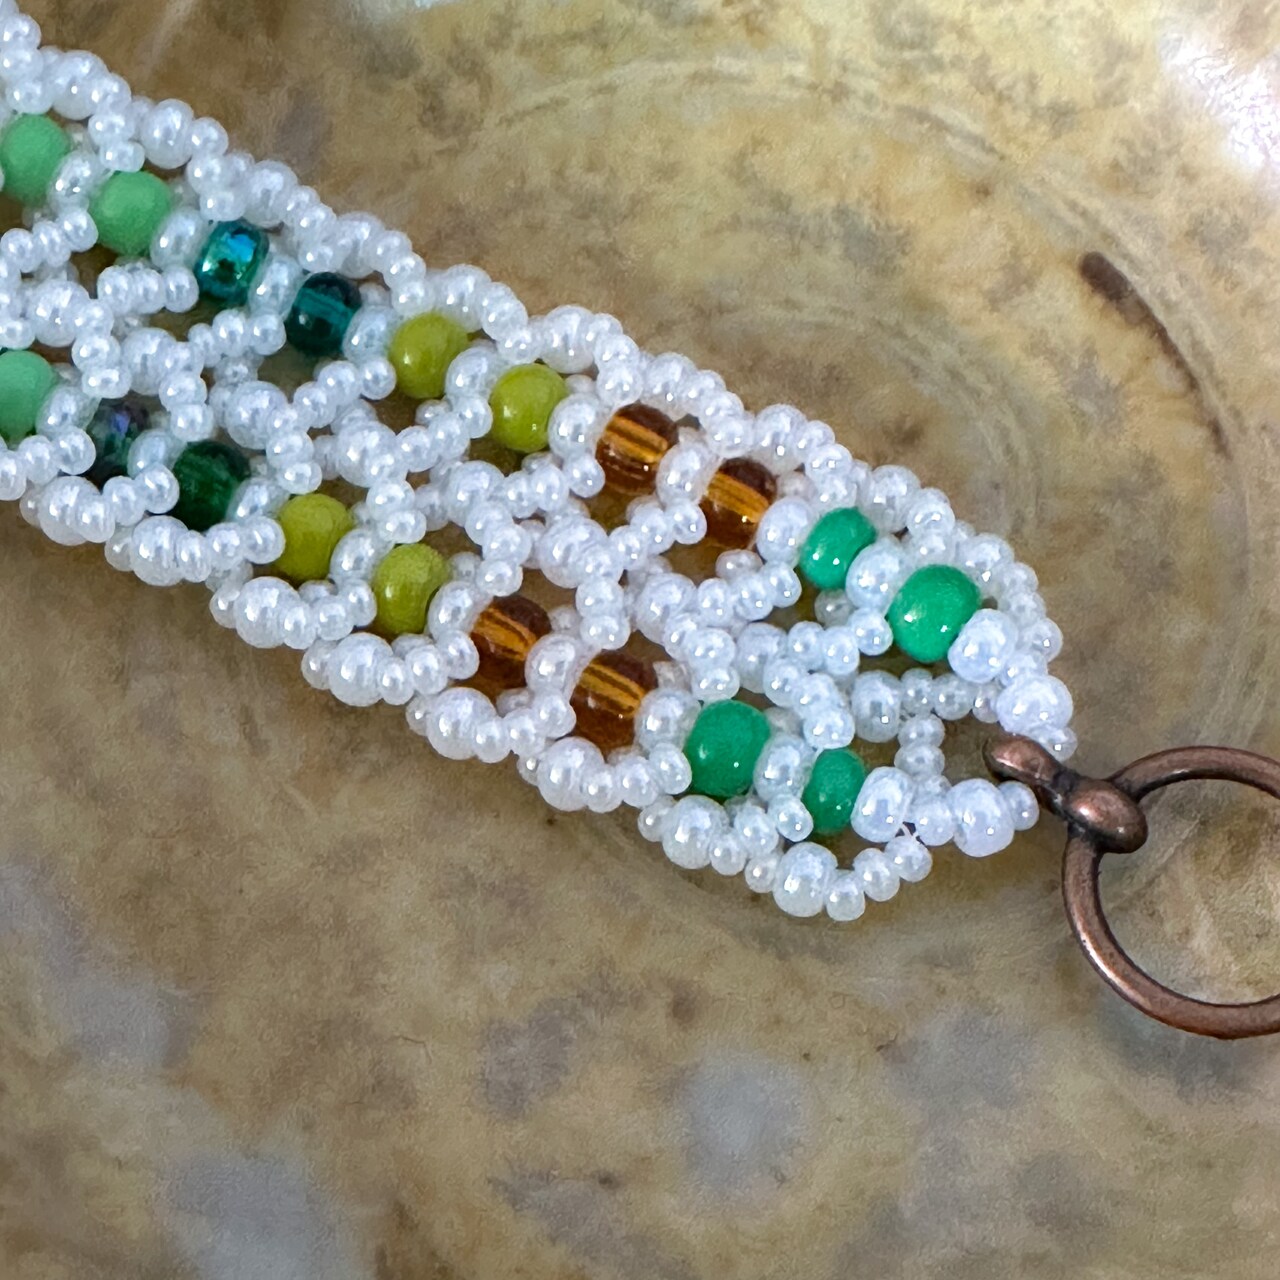 Double, Flat Spiral Rope Stitch with @daniellewickesjewelry